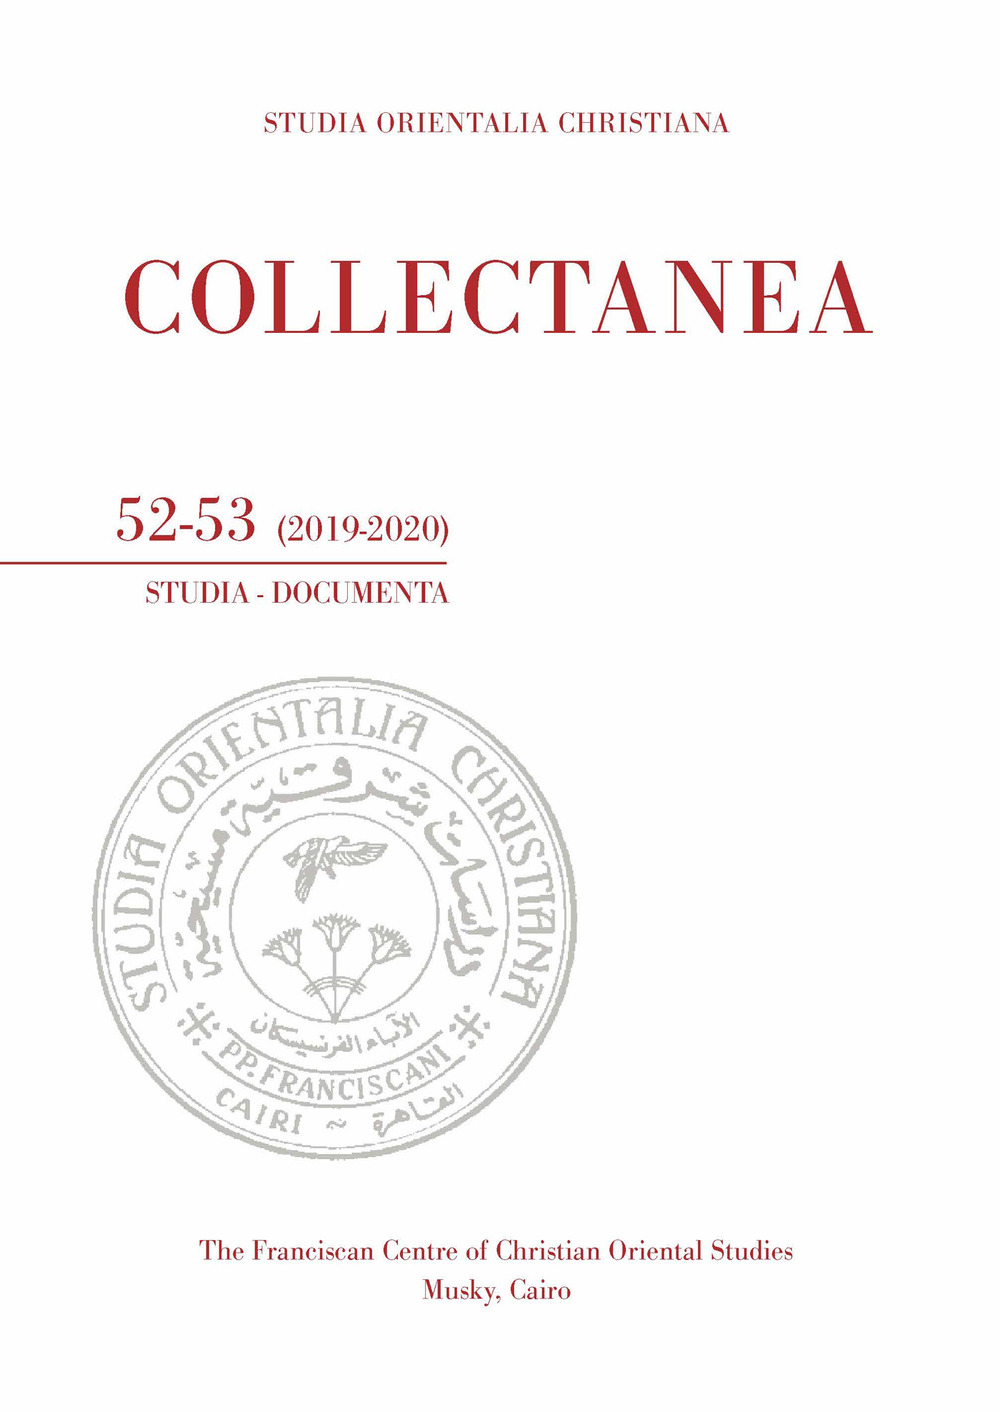 Studia orientalia christiana. Collectanea. Studia, documenta (2019-2020). Vol. 52-53